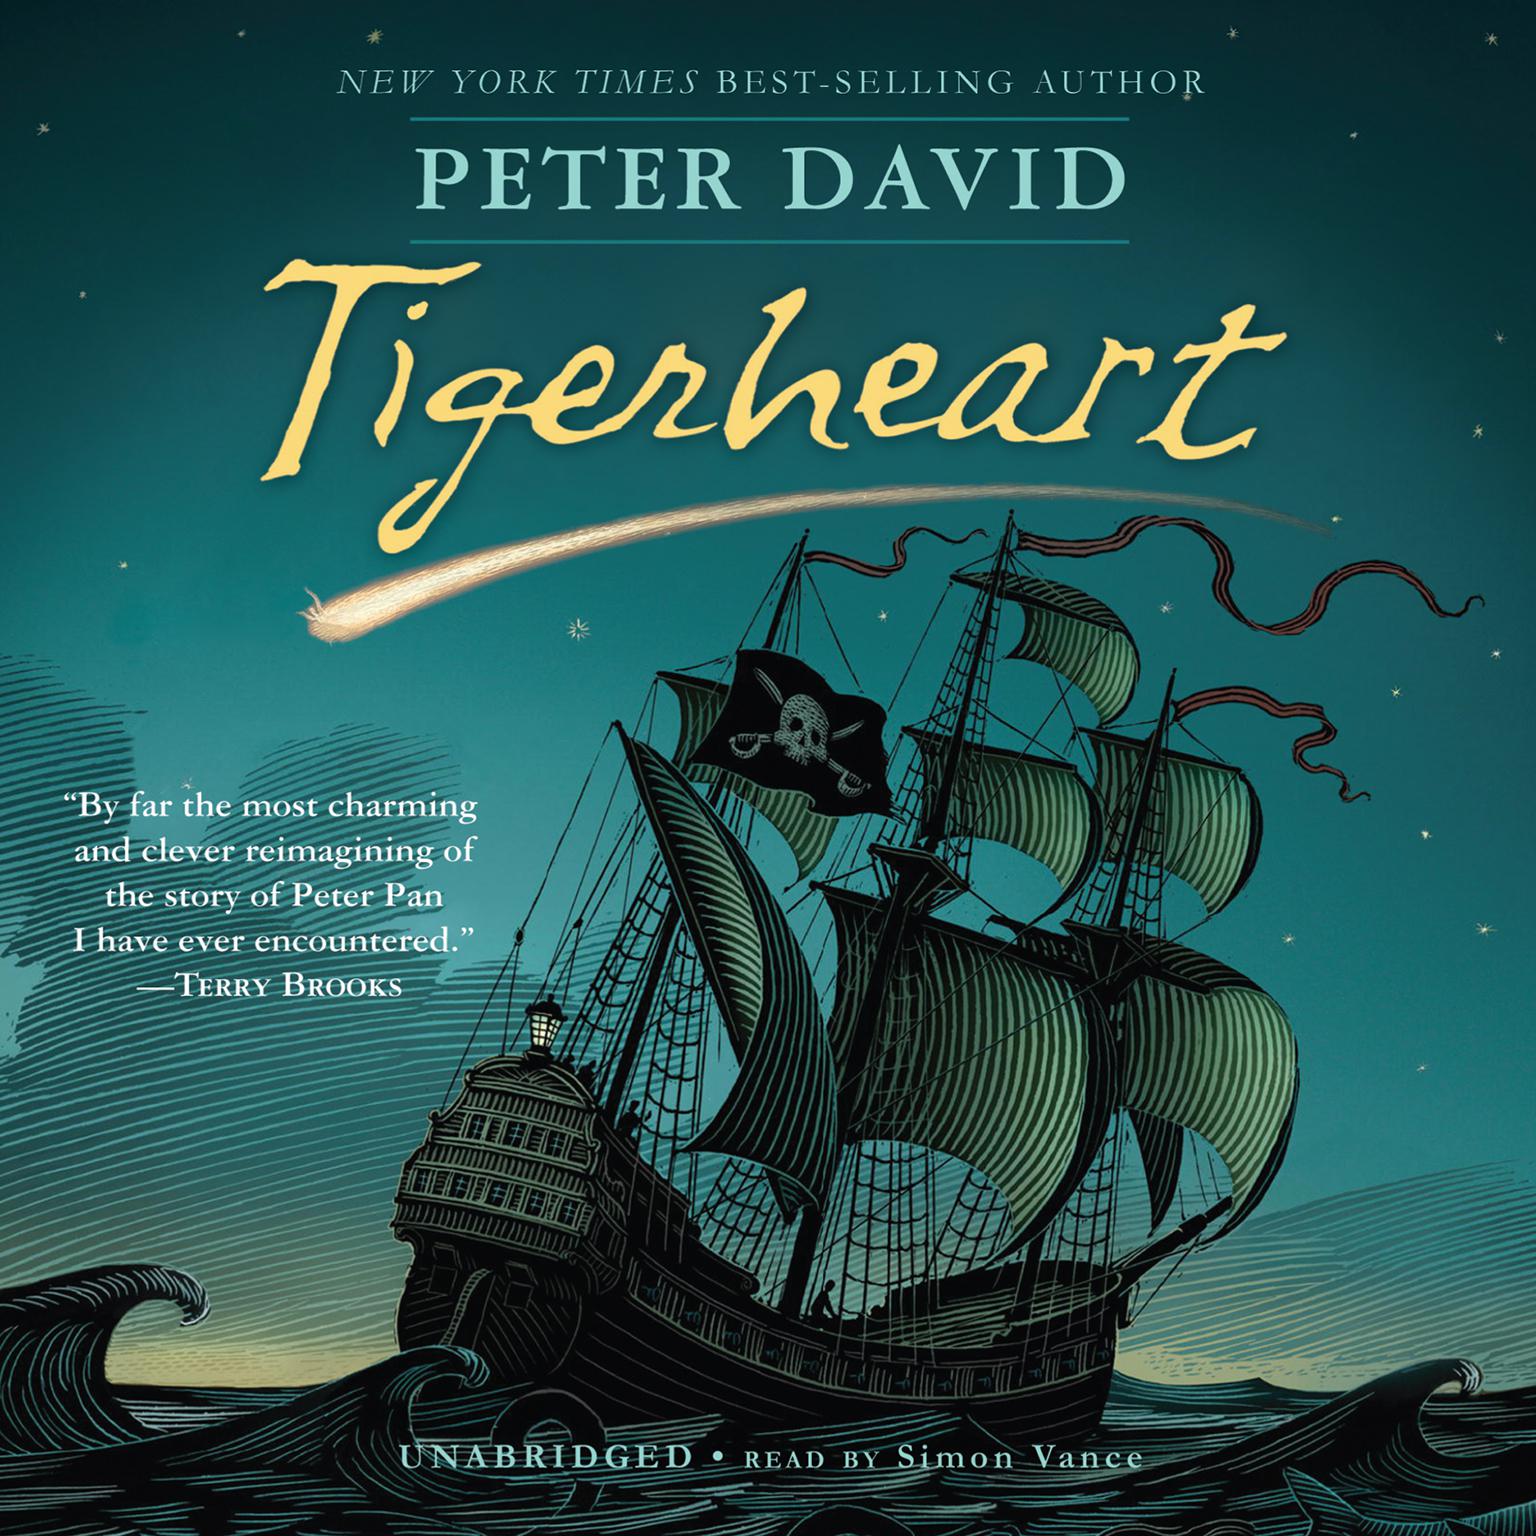 Tigerheart Audiobook, by Peter David